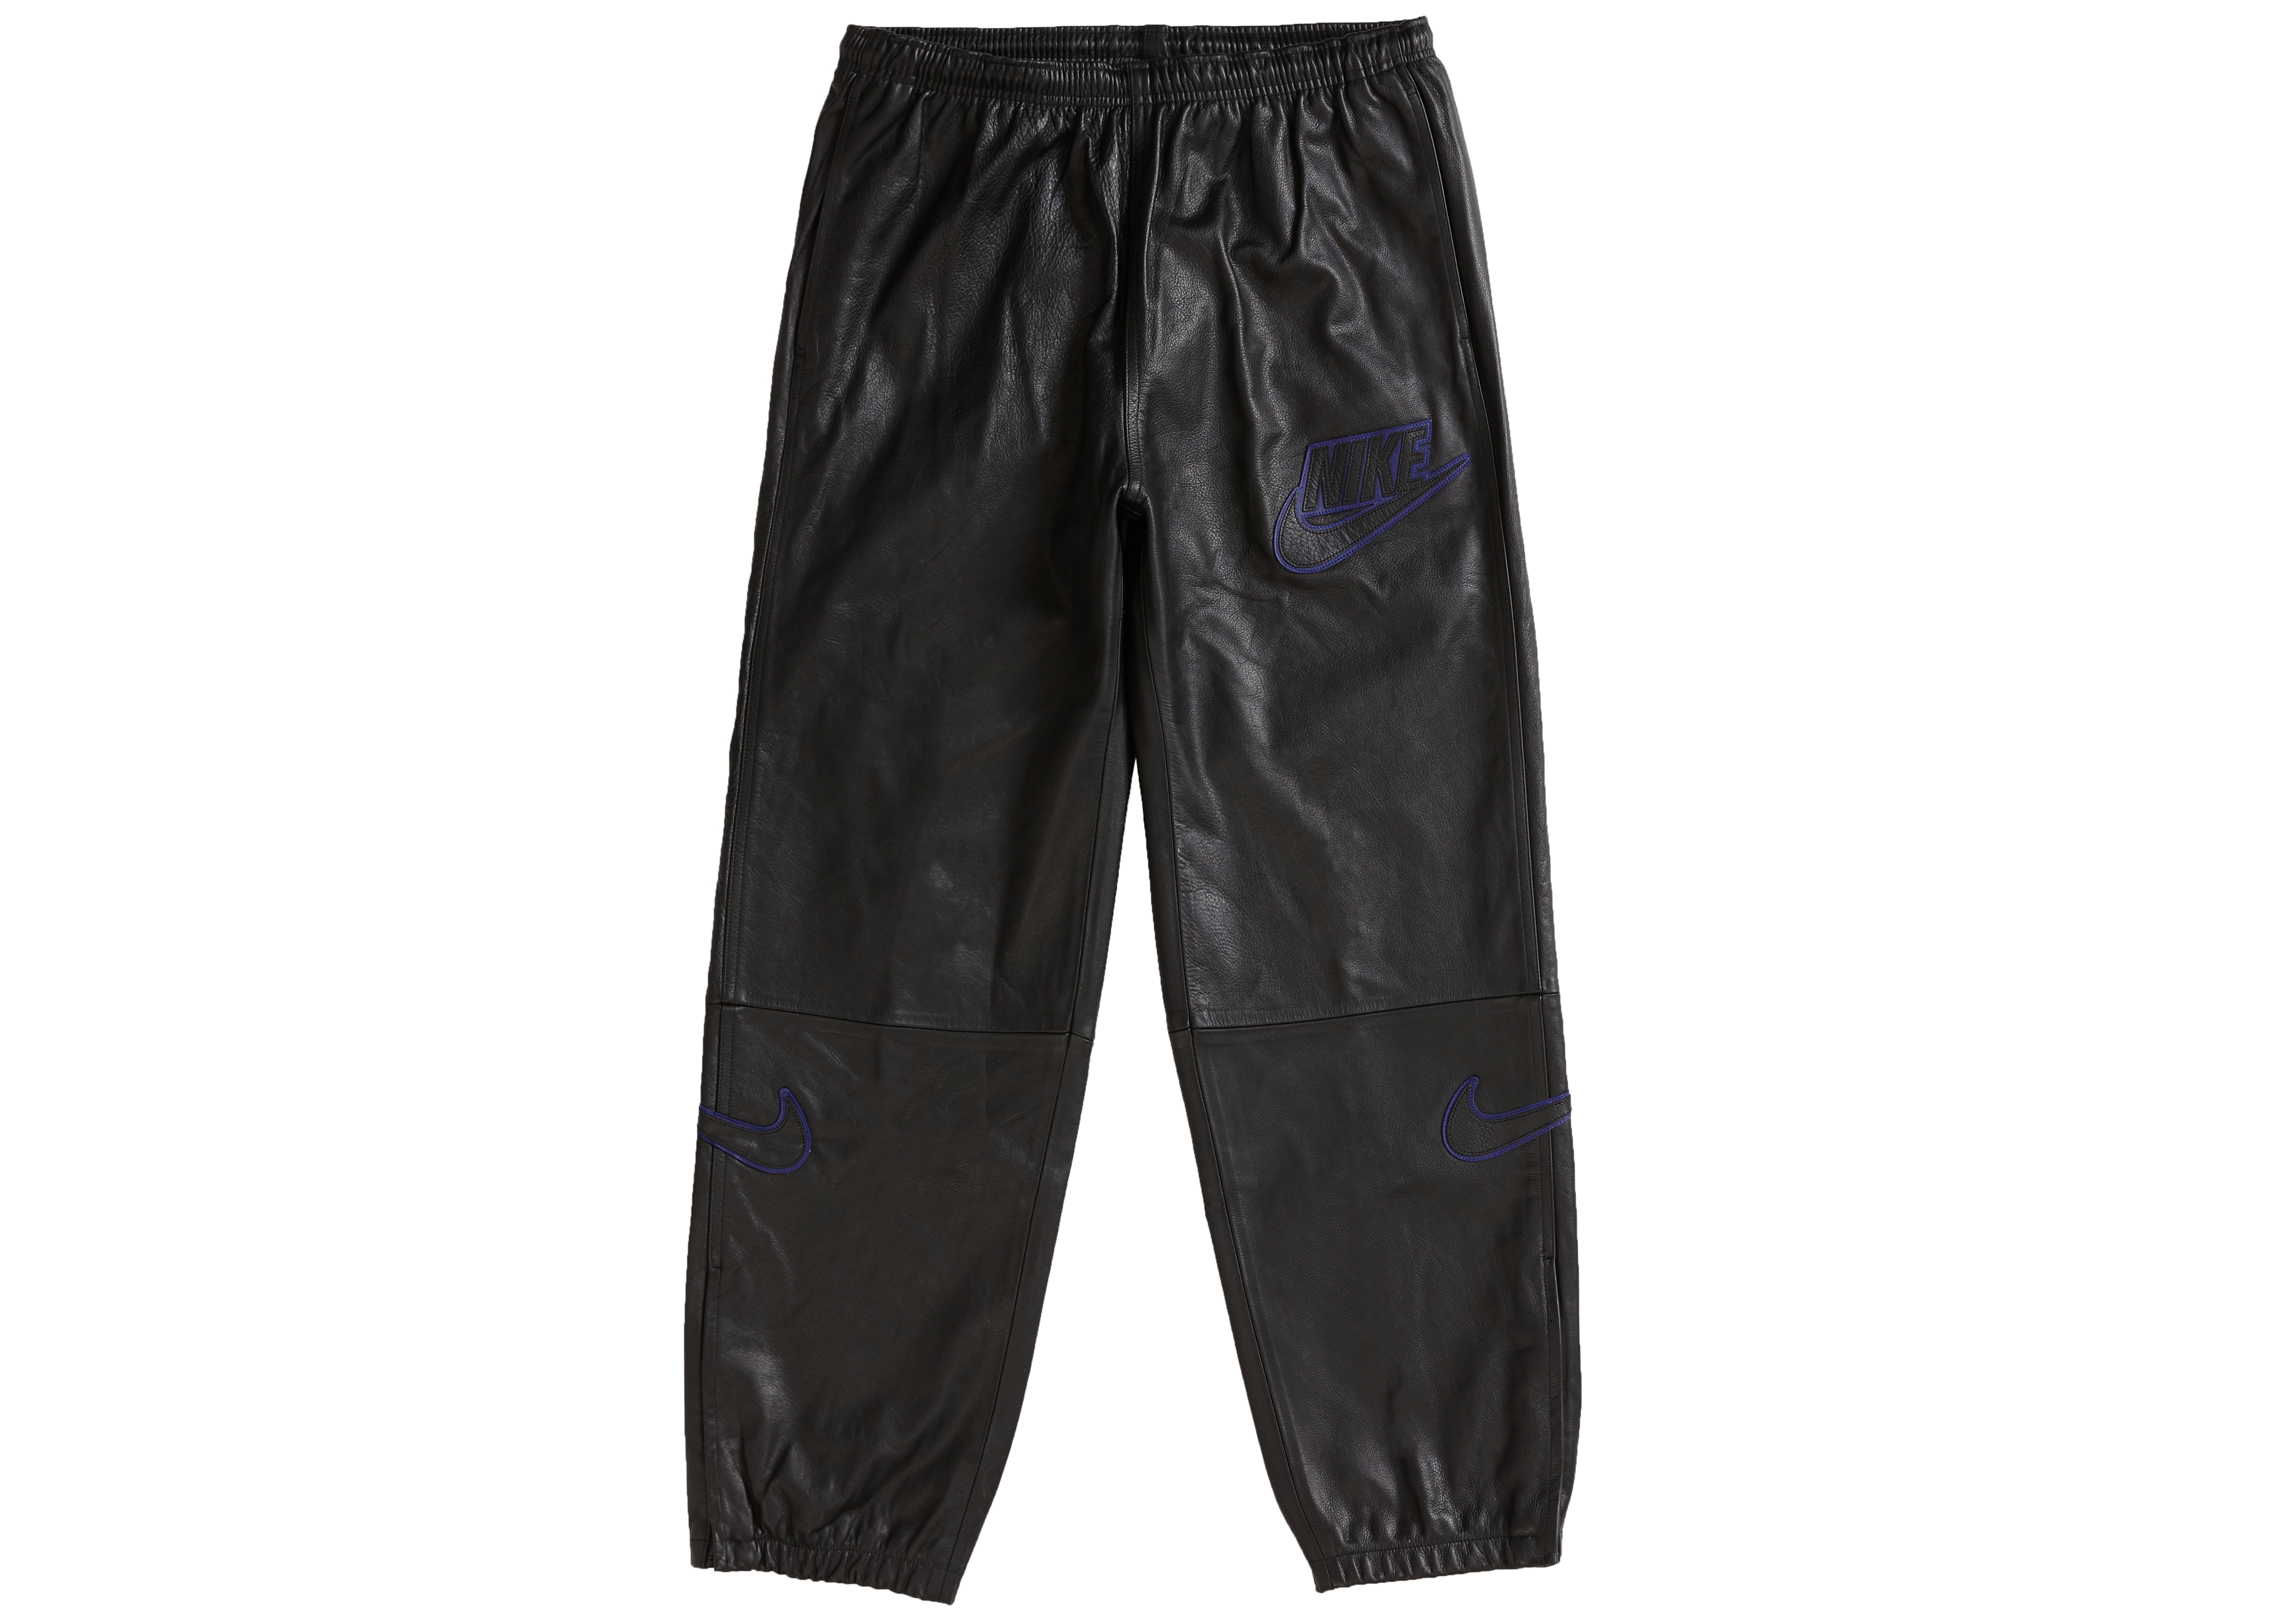 Supreme x Nike Leather Warm Up Pant Black - Novelship